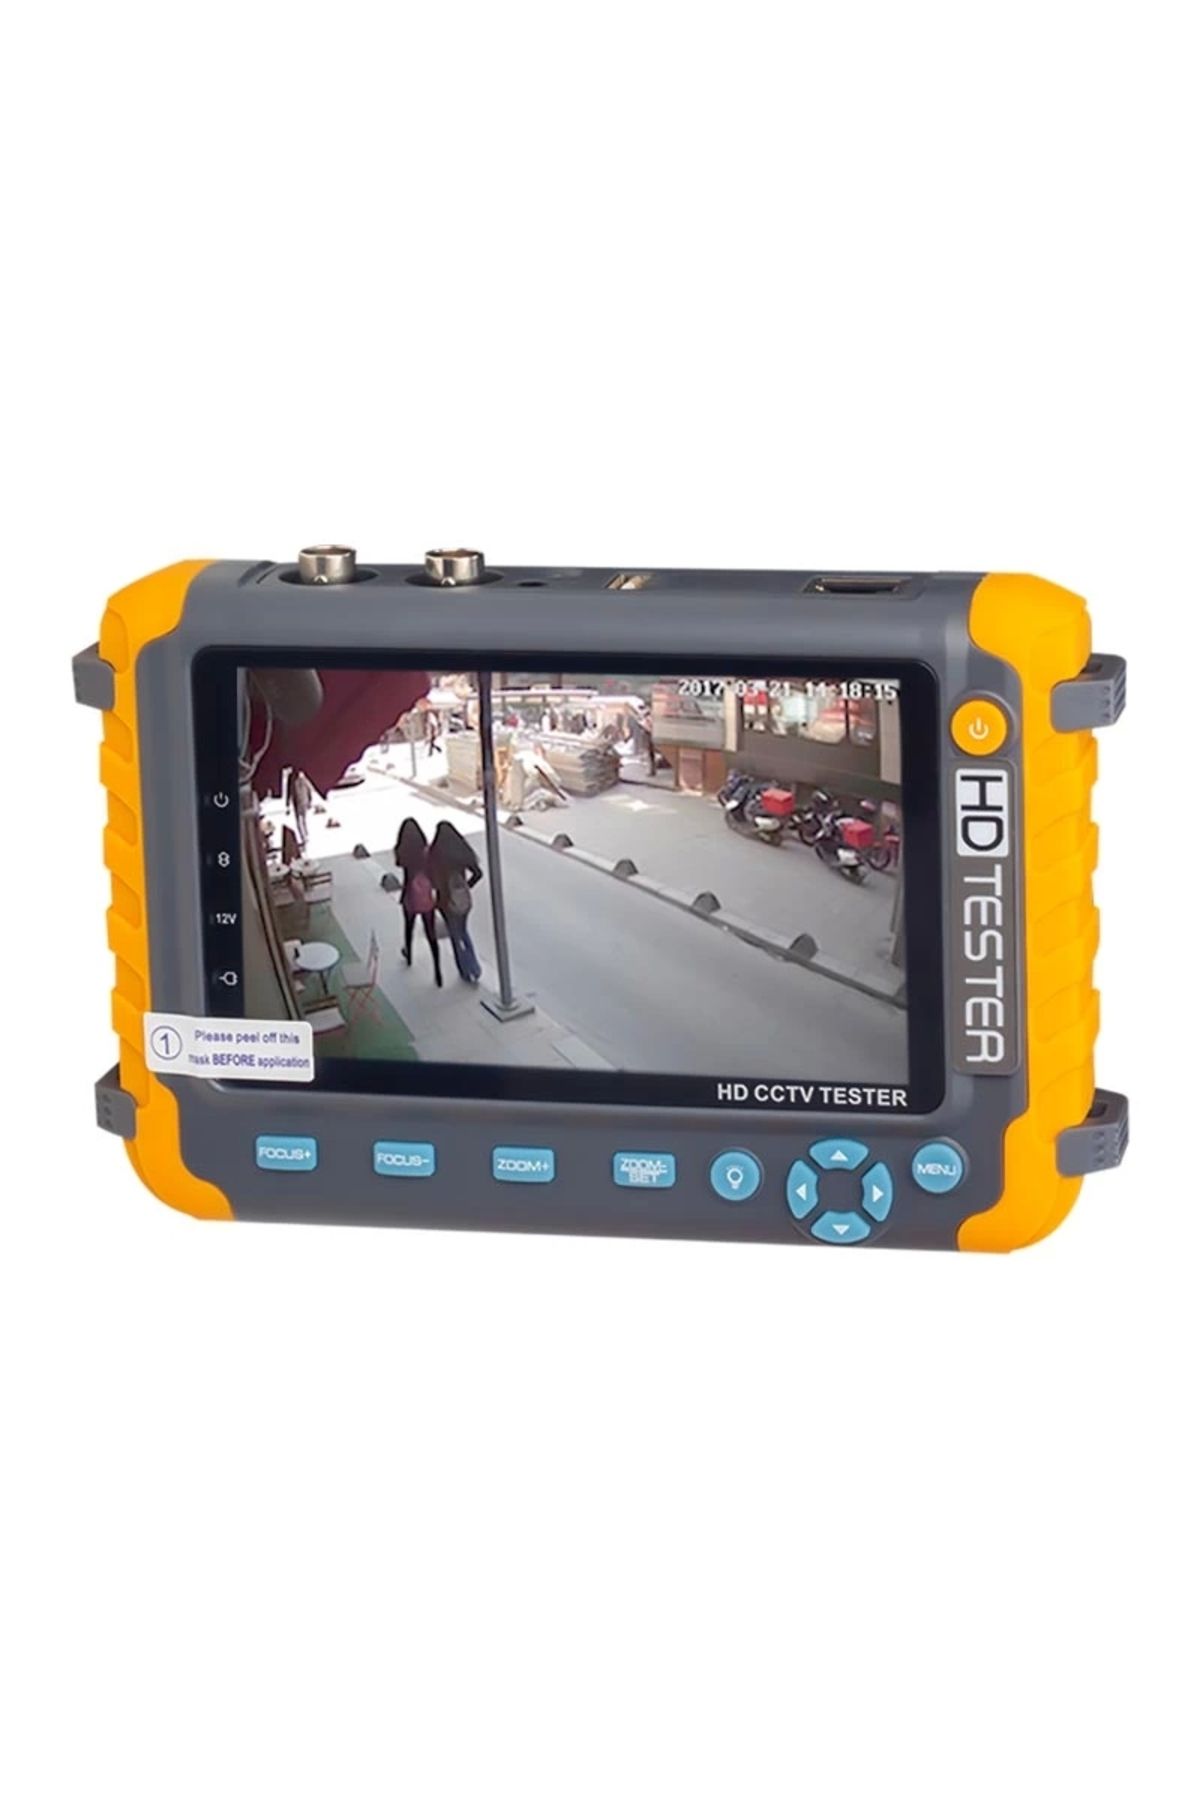 Epilons Magbox Ahd Analog Tvı Cctv Kamera Test Cihazı 5 Ekran*fenerli